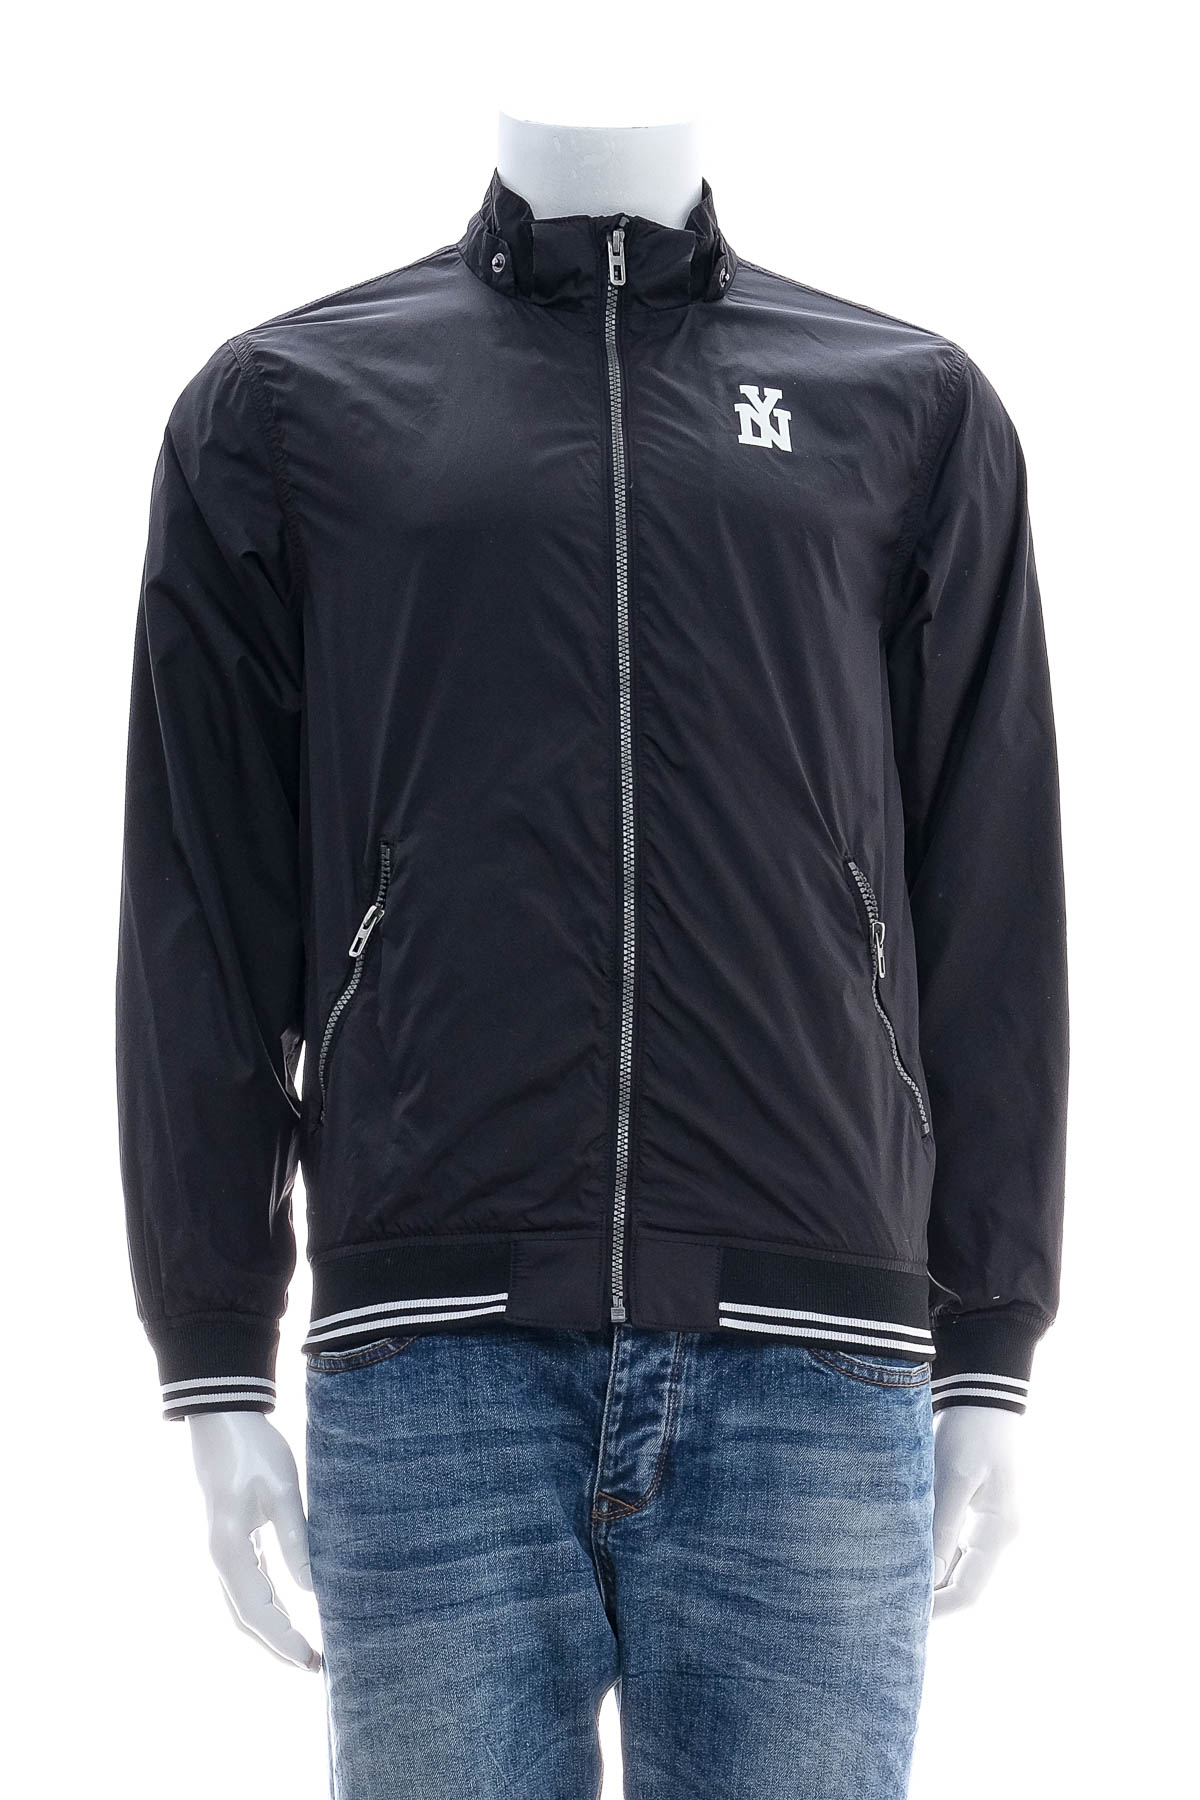 Boy's jacket - H&M - 0